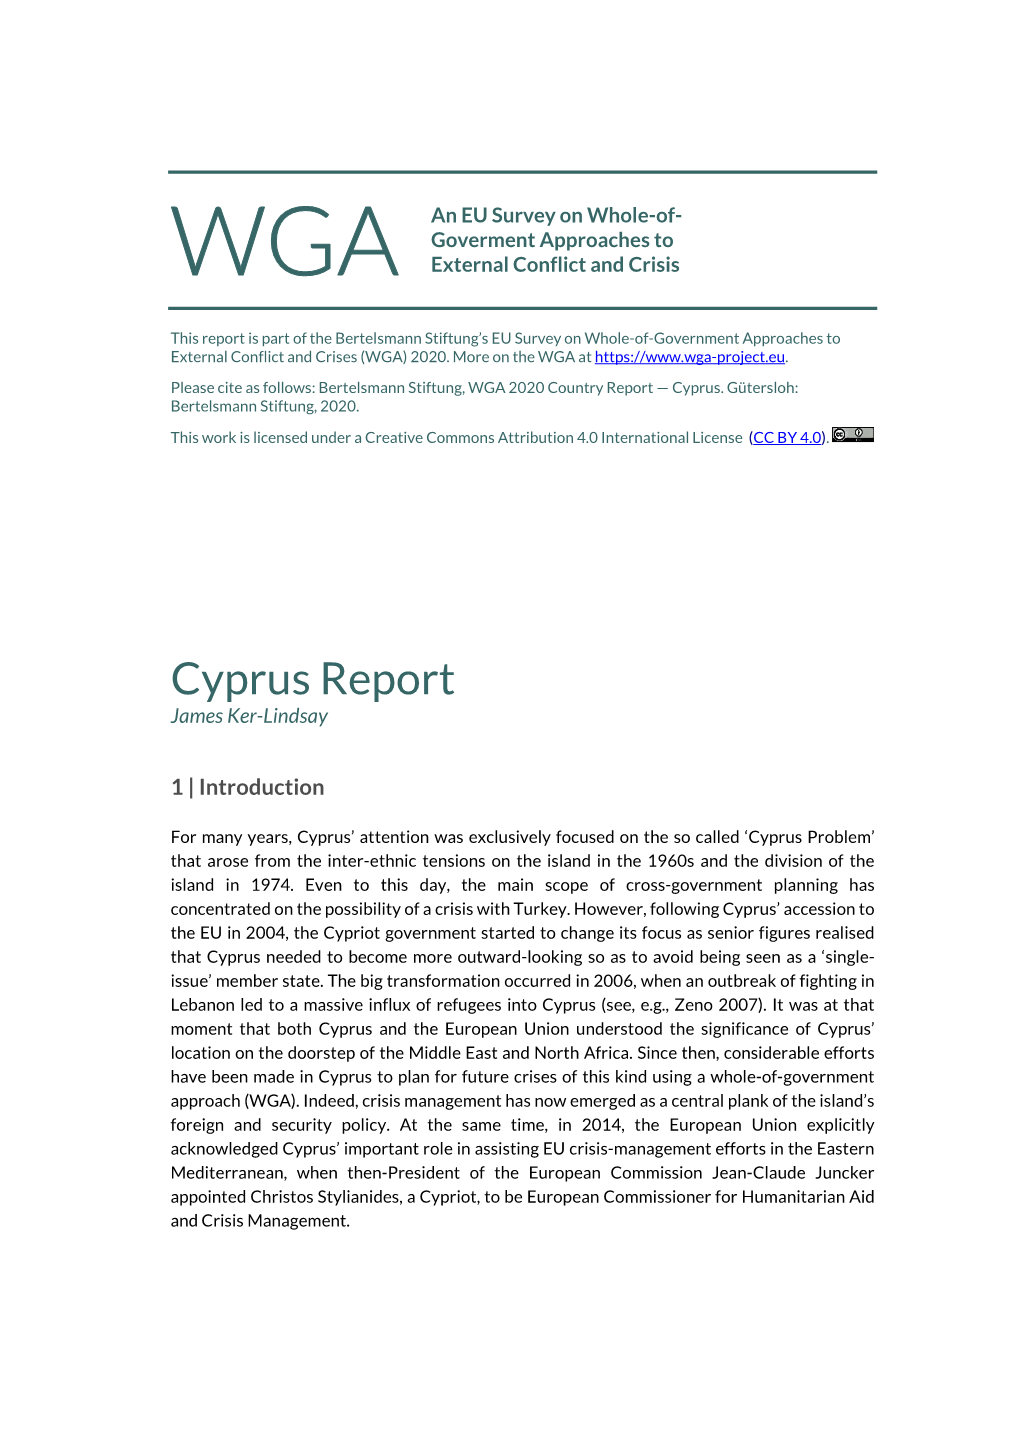 Cyprus Report James Ker-Lindsay